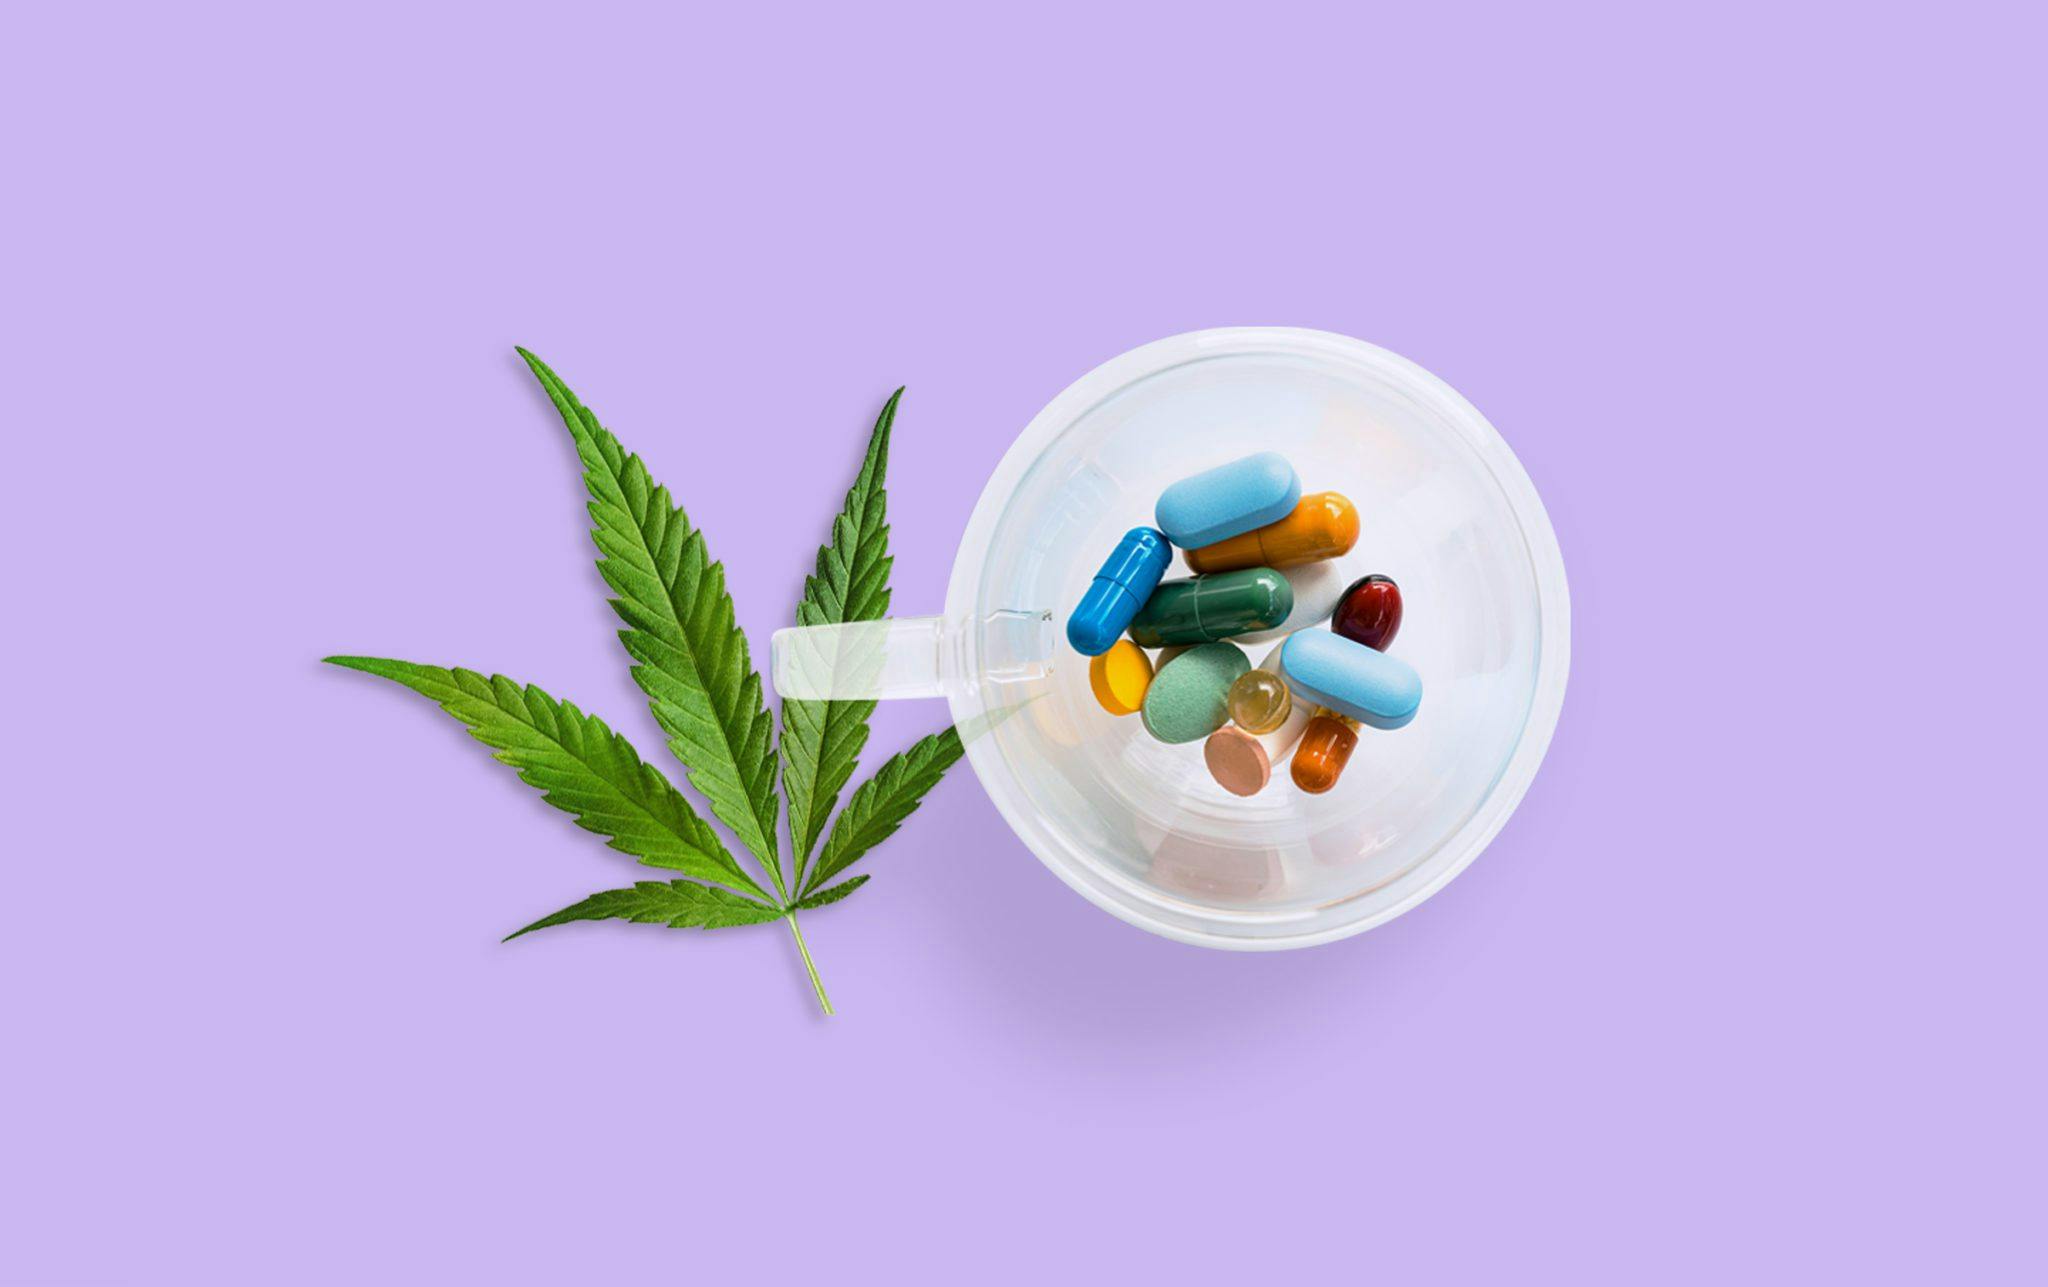 medication in a dish and a marijuana leaf